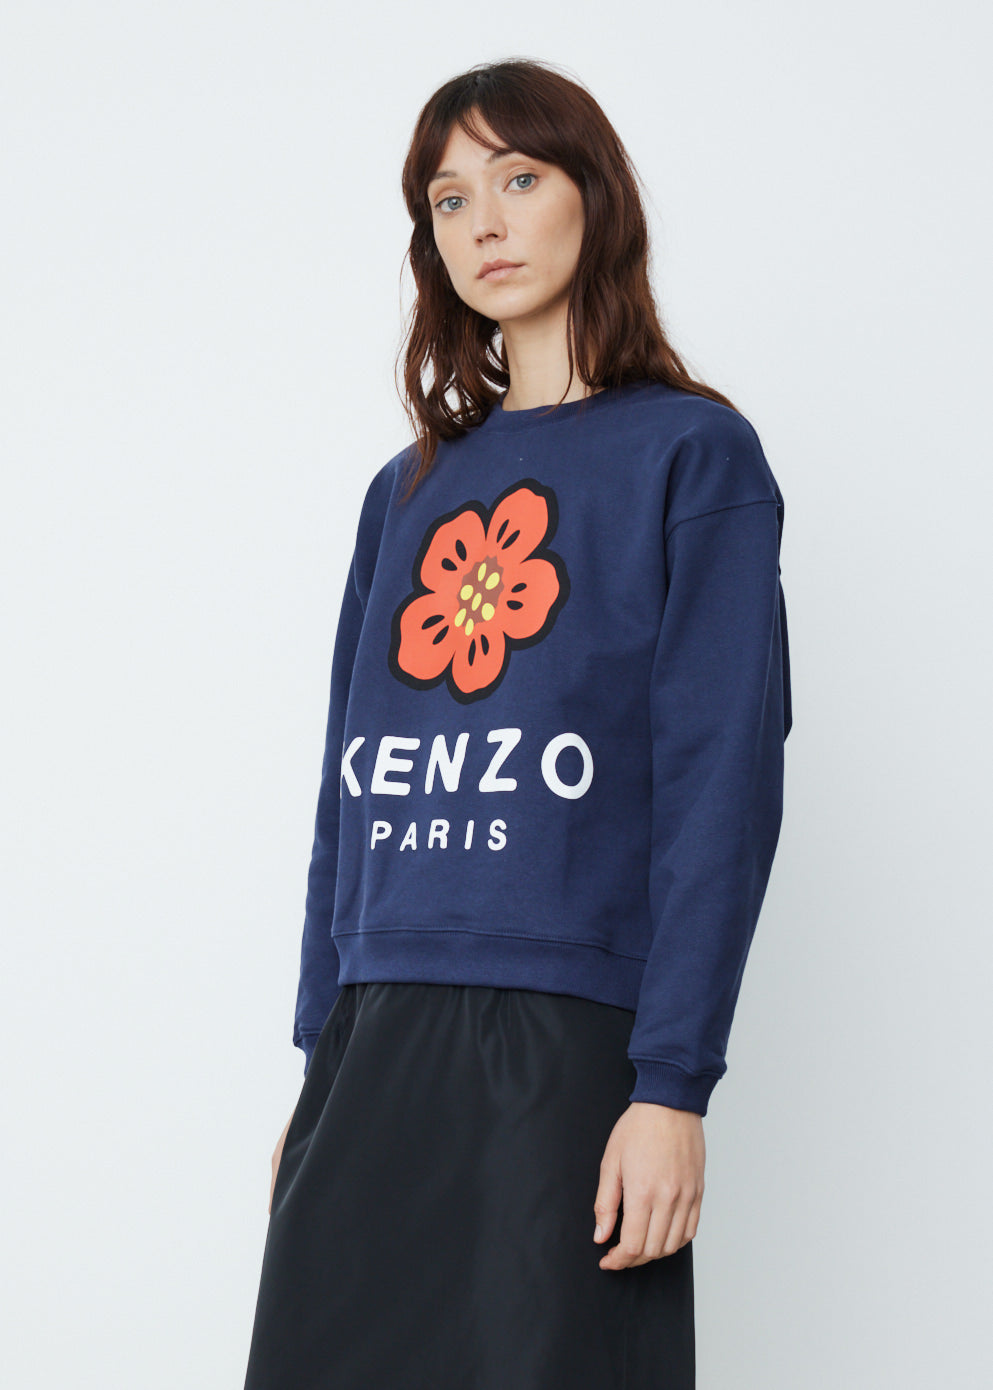 THE KENZO PARIS “BOKE FLOWER” COLLECTION